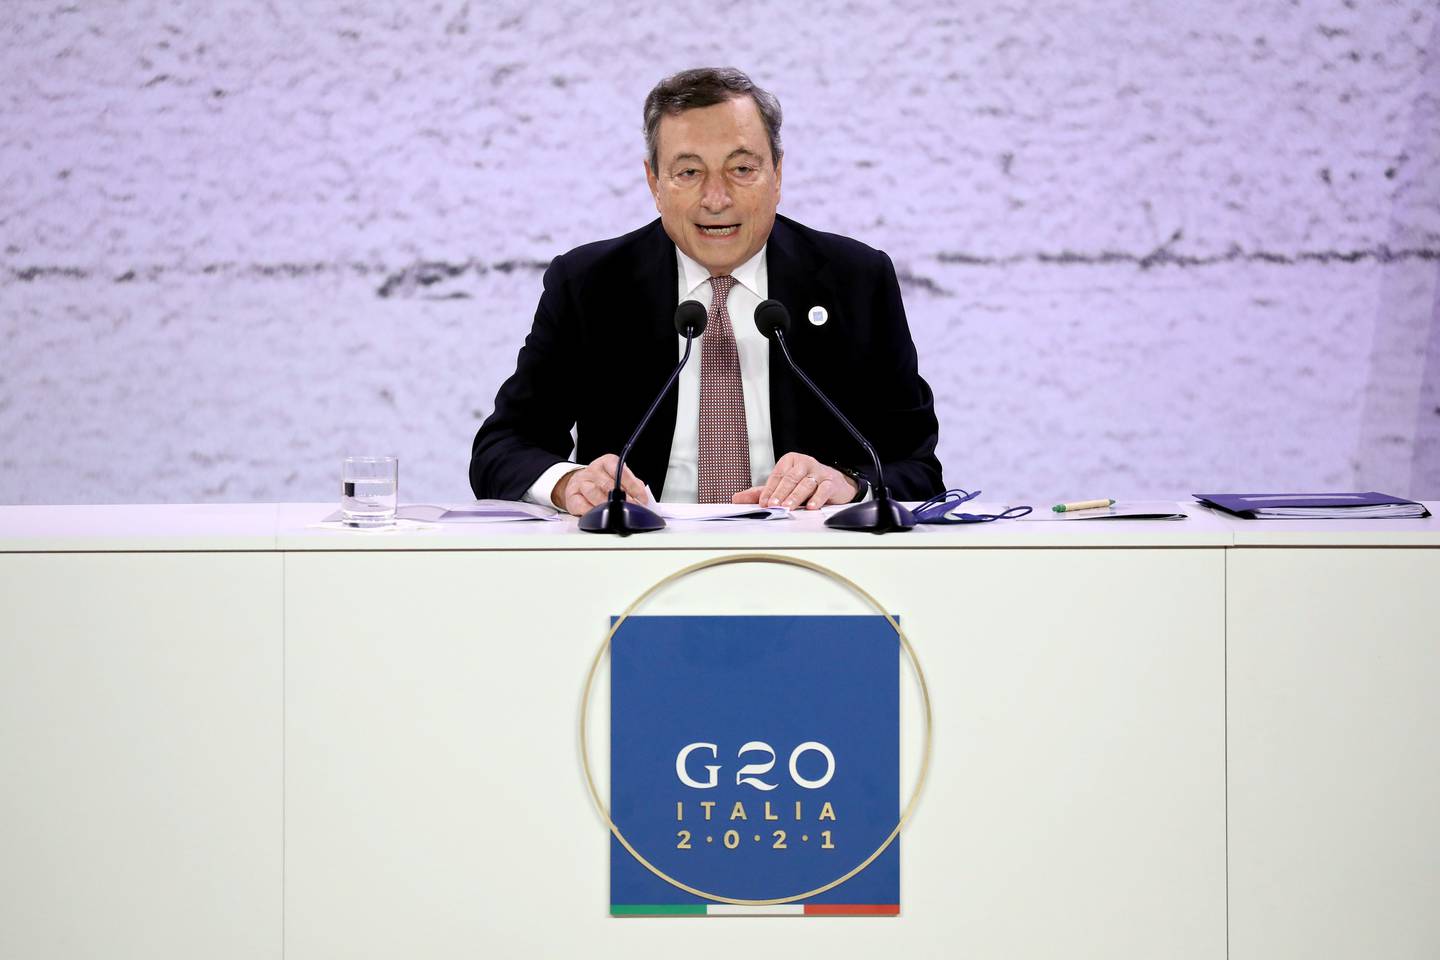 Mario Draghi, primer ministro de Italia, habla durante una nueva conferencia del G-20.dfd